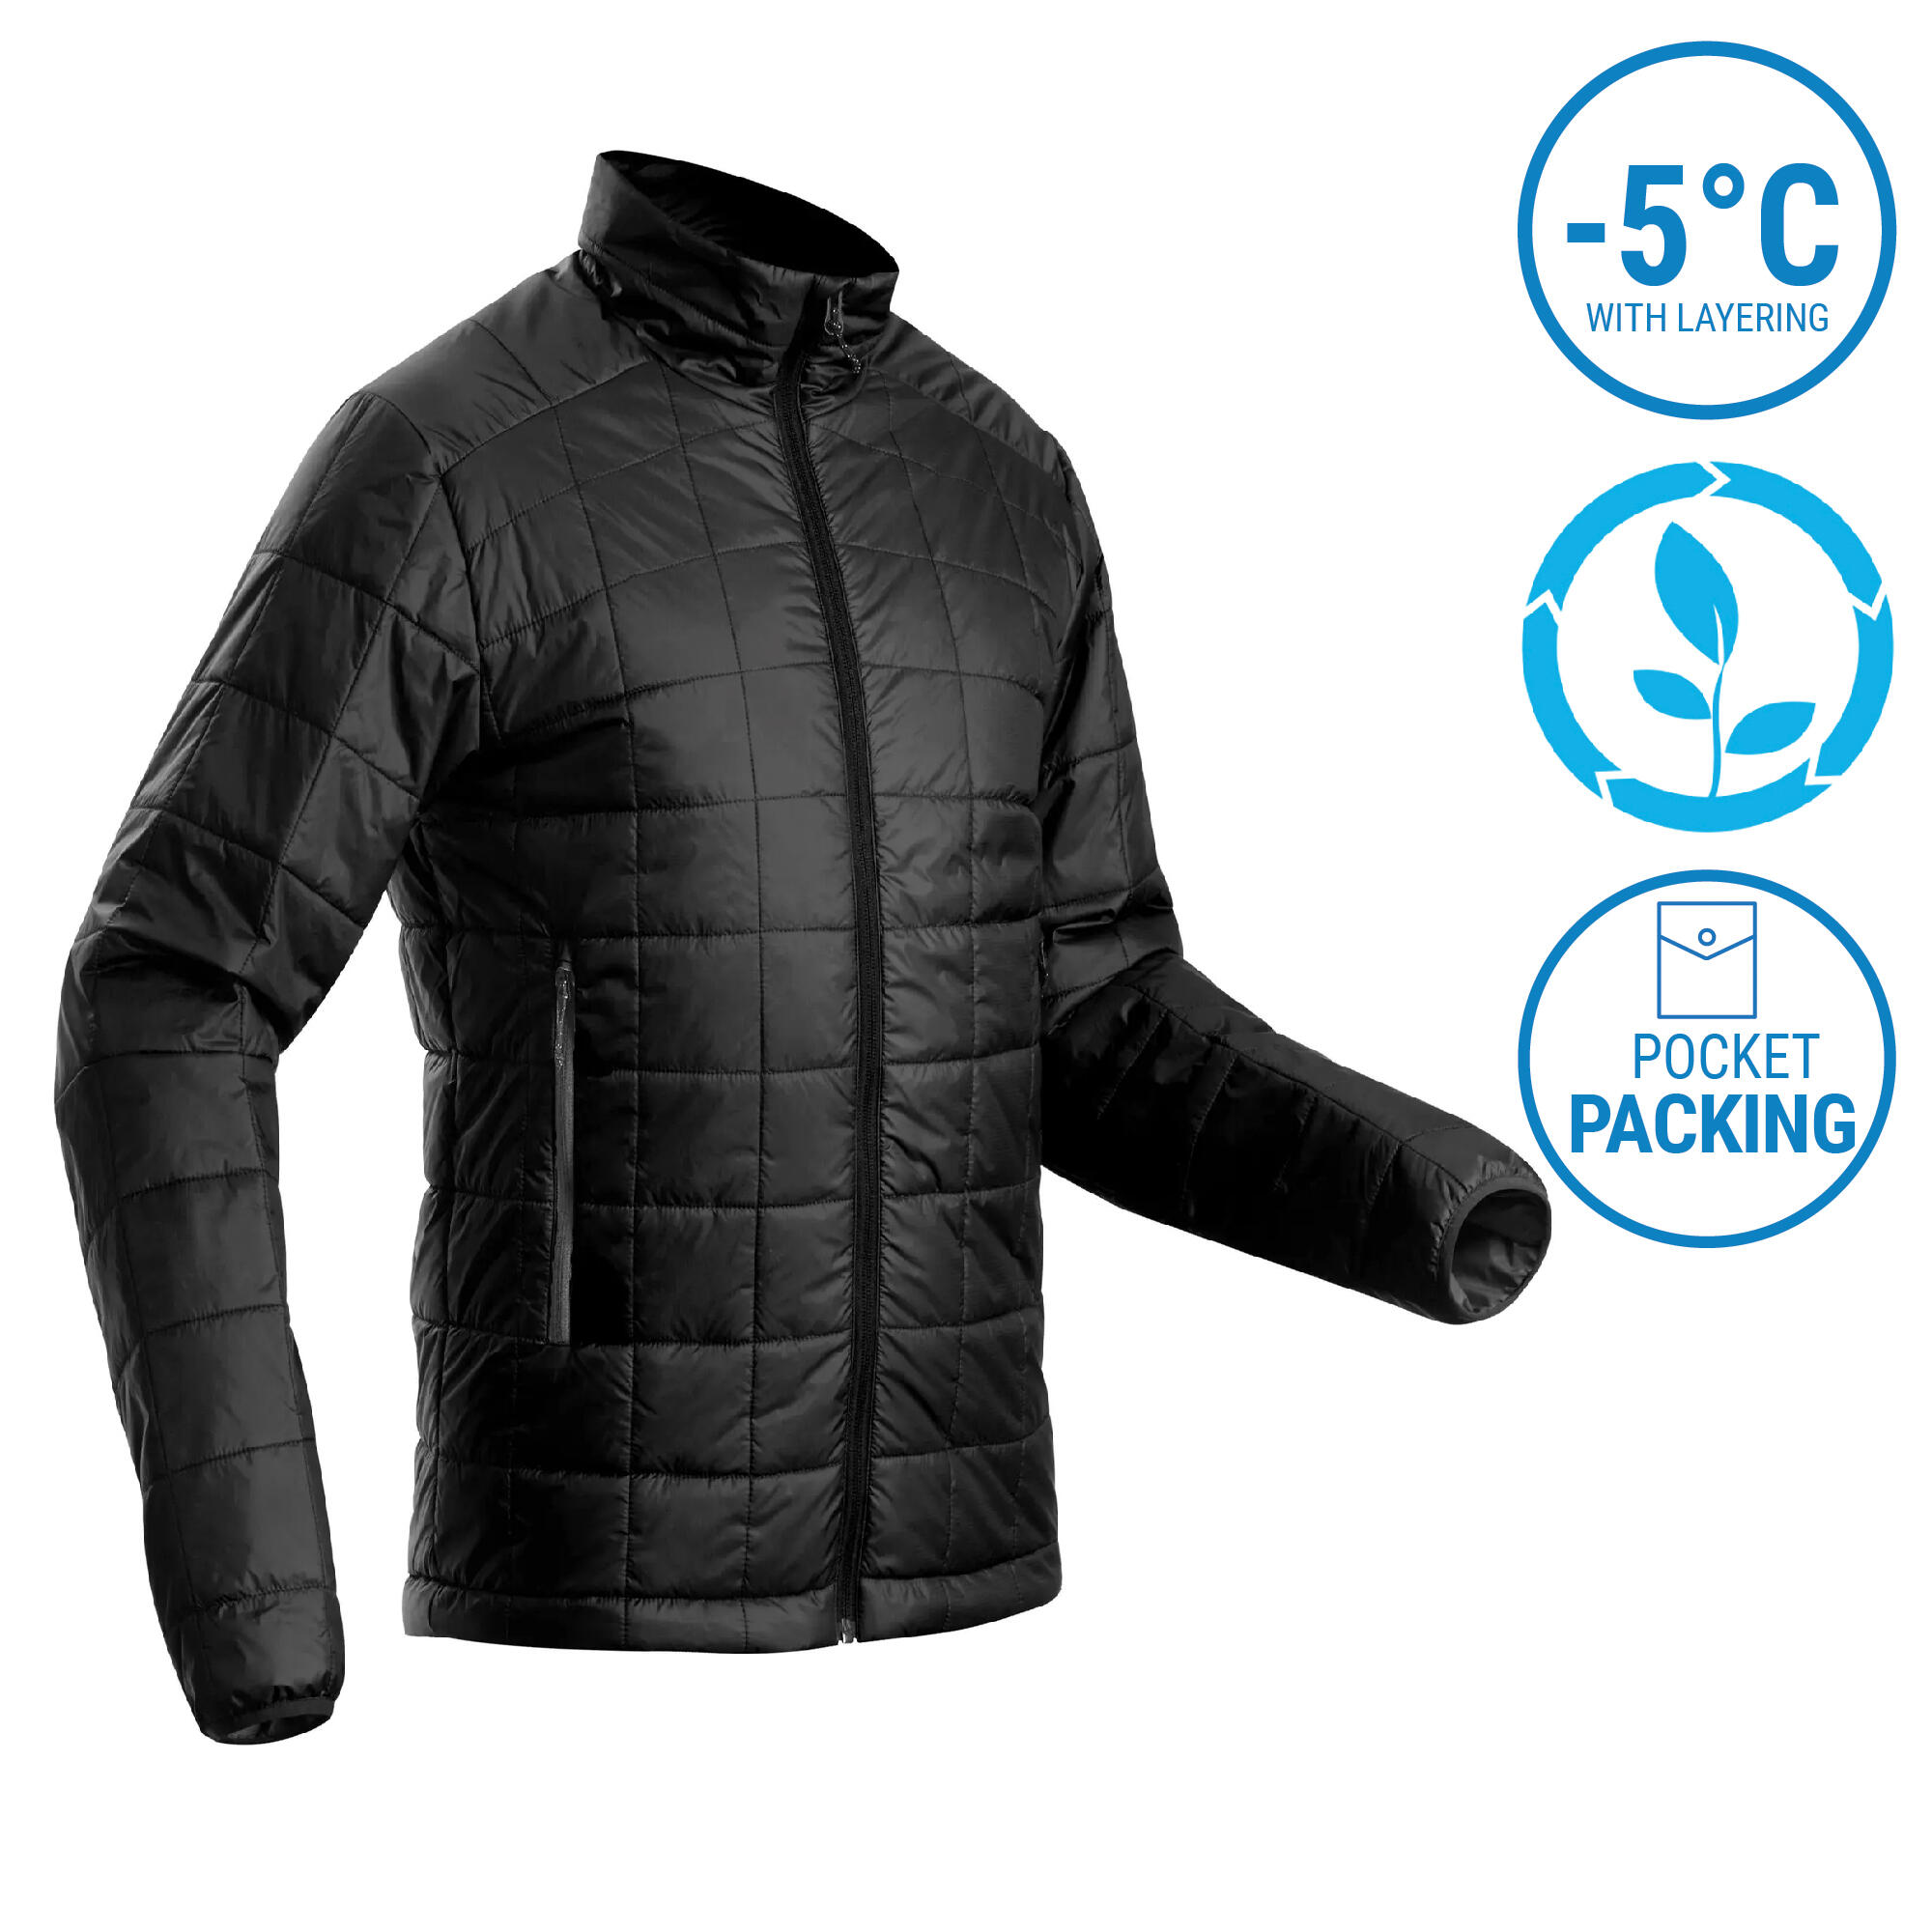 DECATHLON Raincoat for Men Waterproof with Hood, 1 year warranty (Grey) :  Amazon.in: Clothing & Accessories